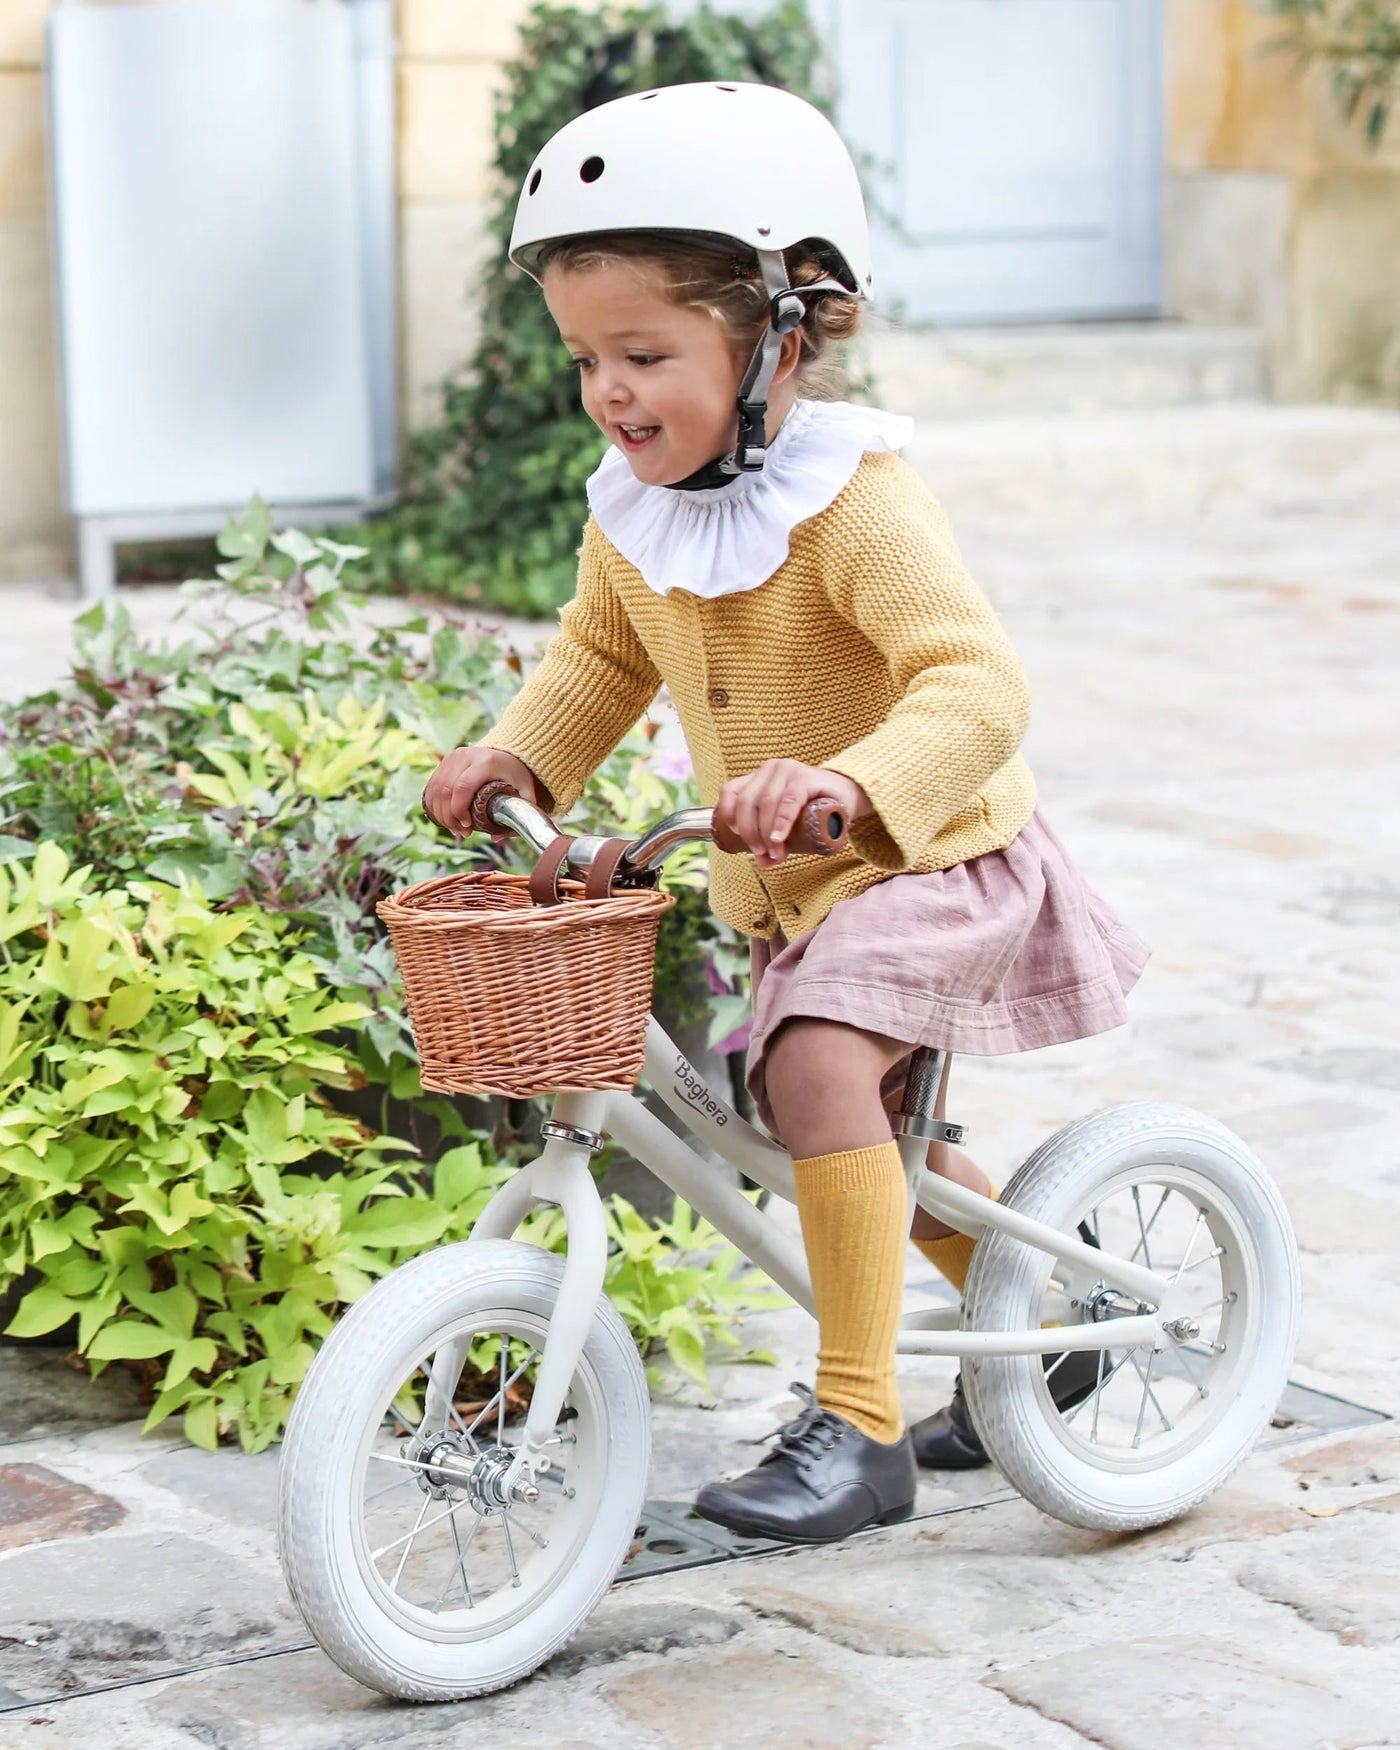 Bicycle BALANCE BIKE Ivory White + Helmet - Posh Baby & Kids Canada